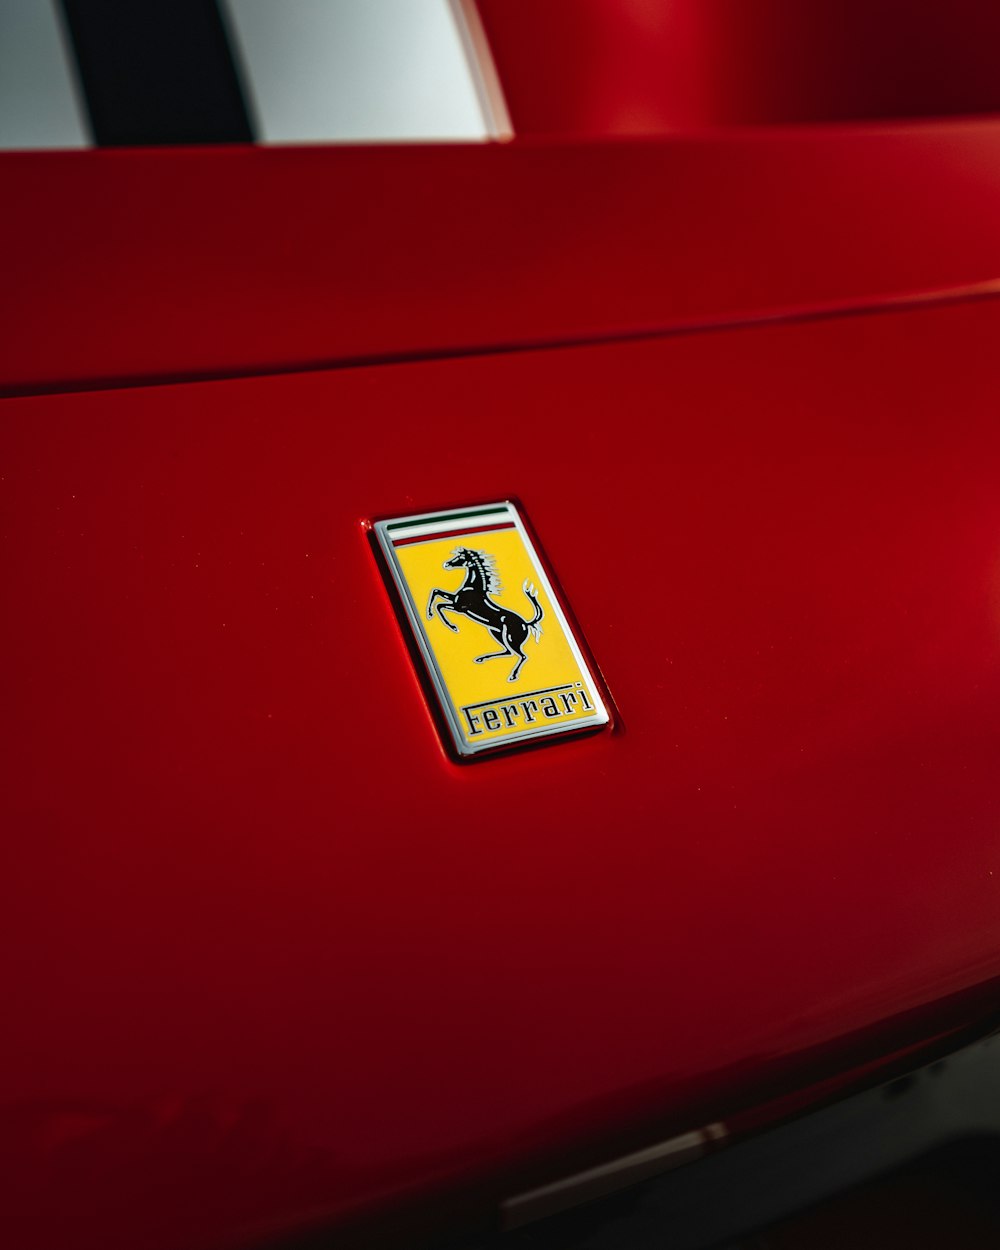 a close up of a ferrari badge on a red car